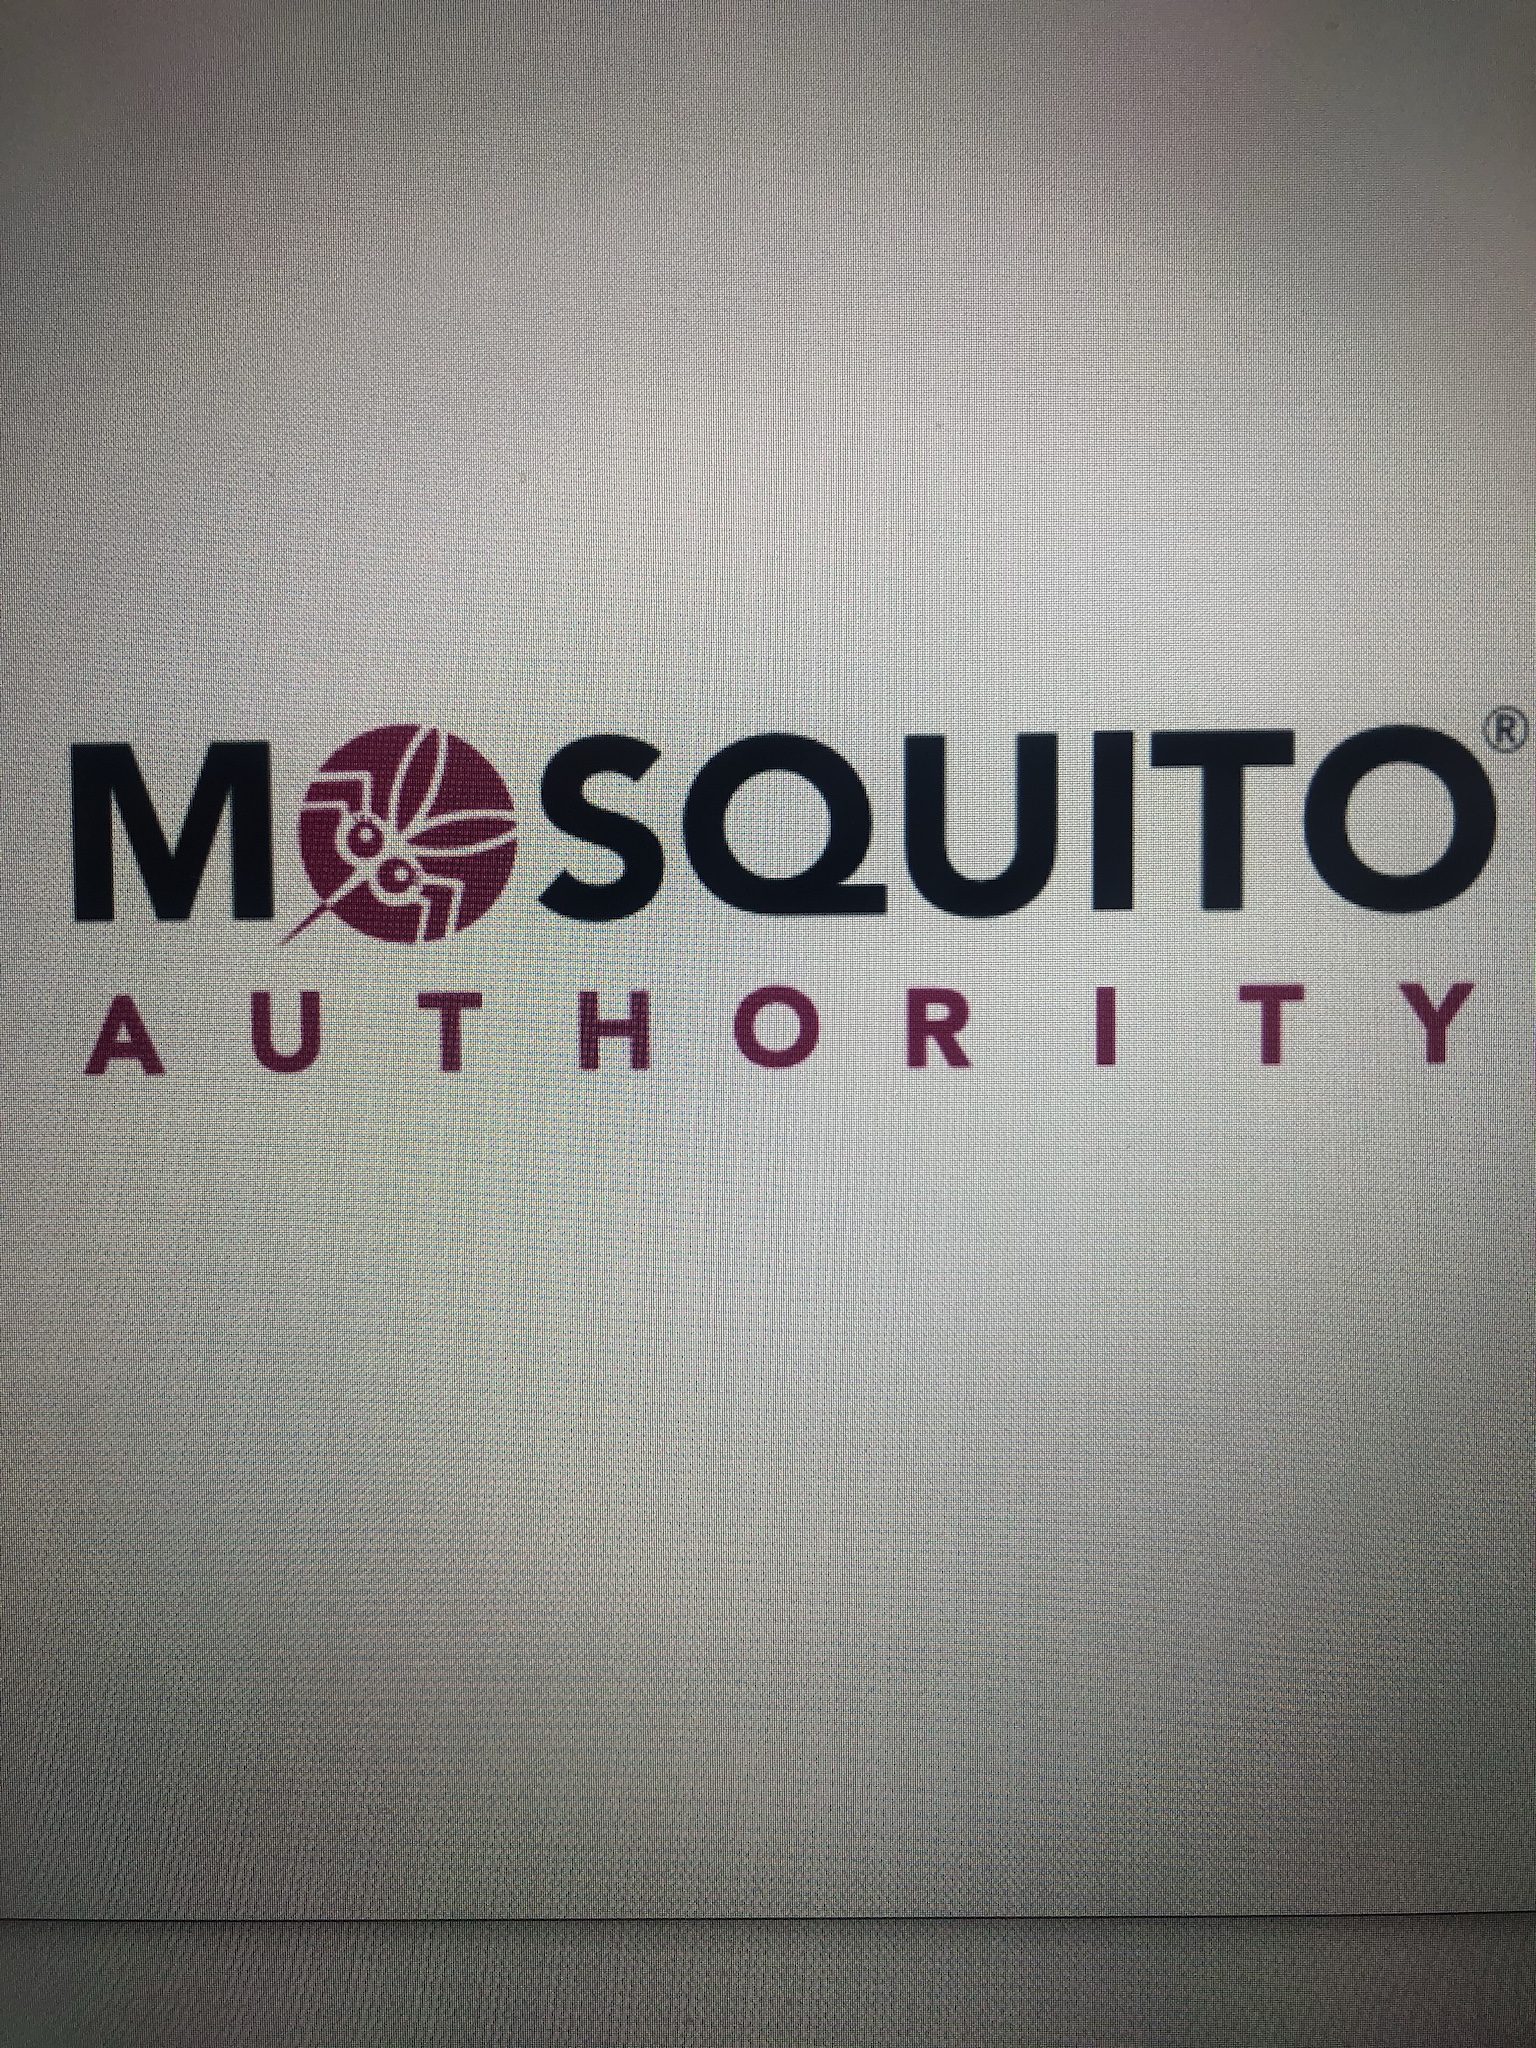 Mosquito Authority Of Louisville